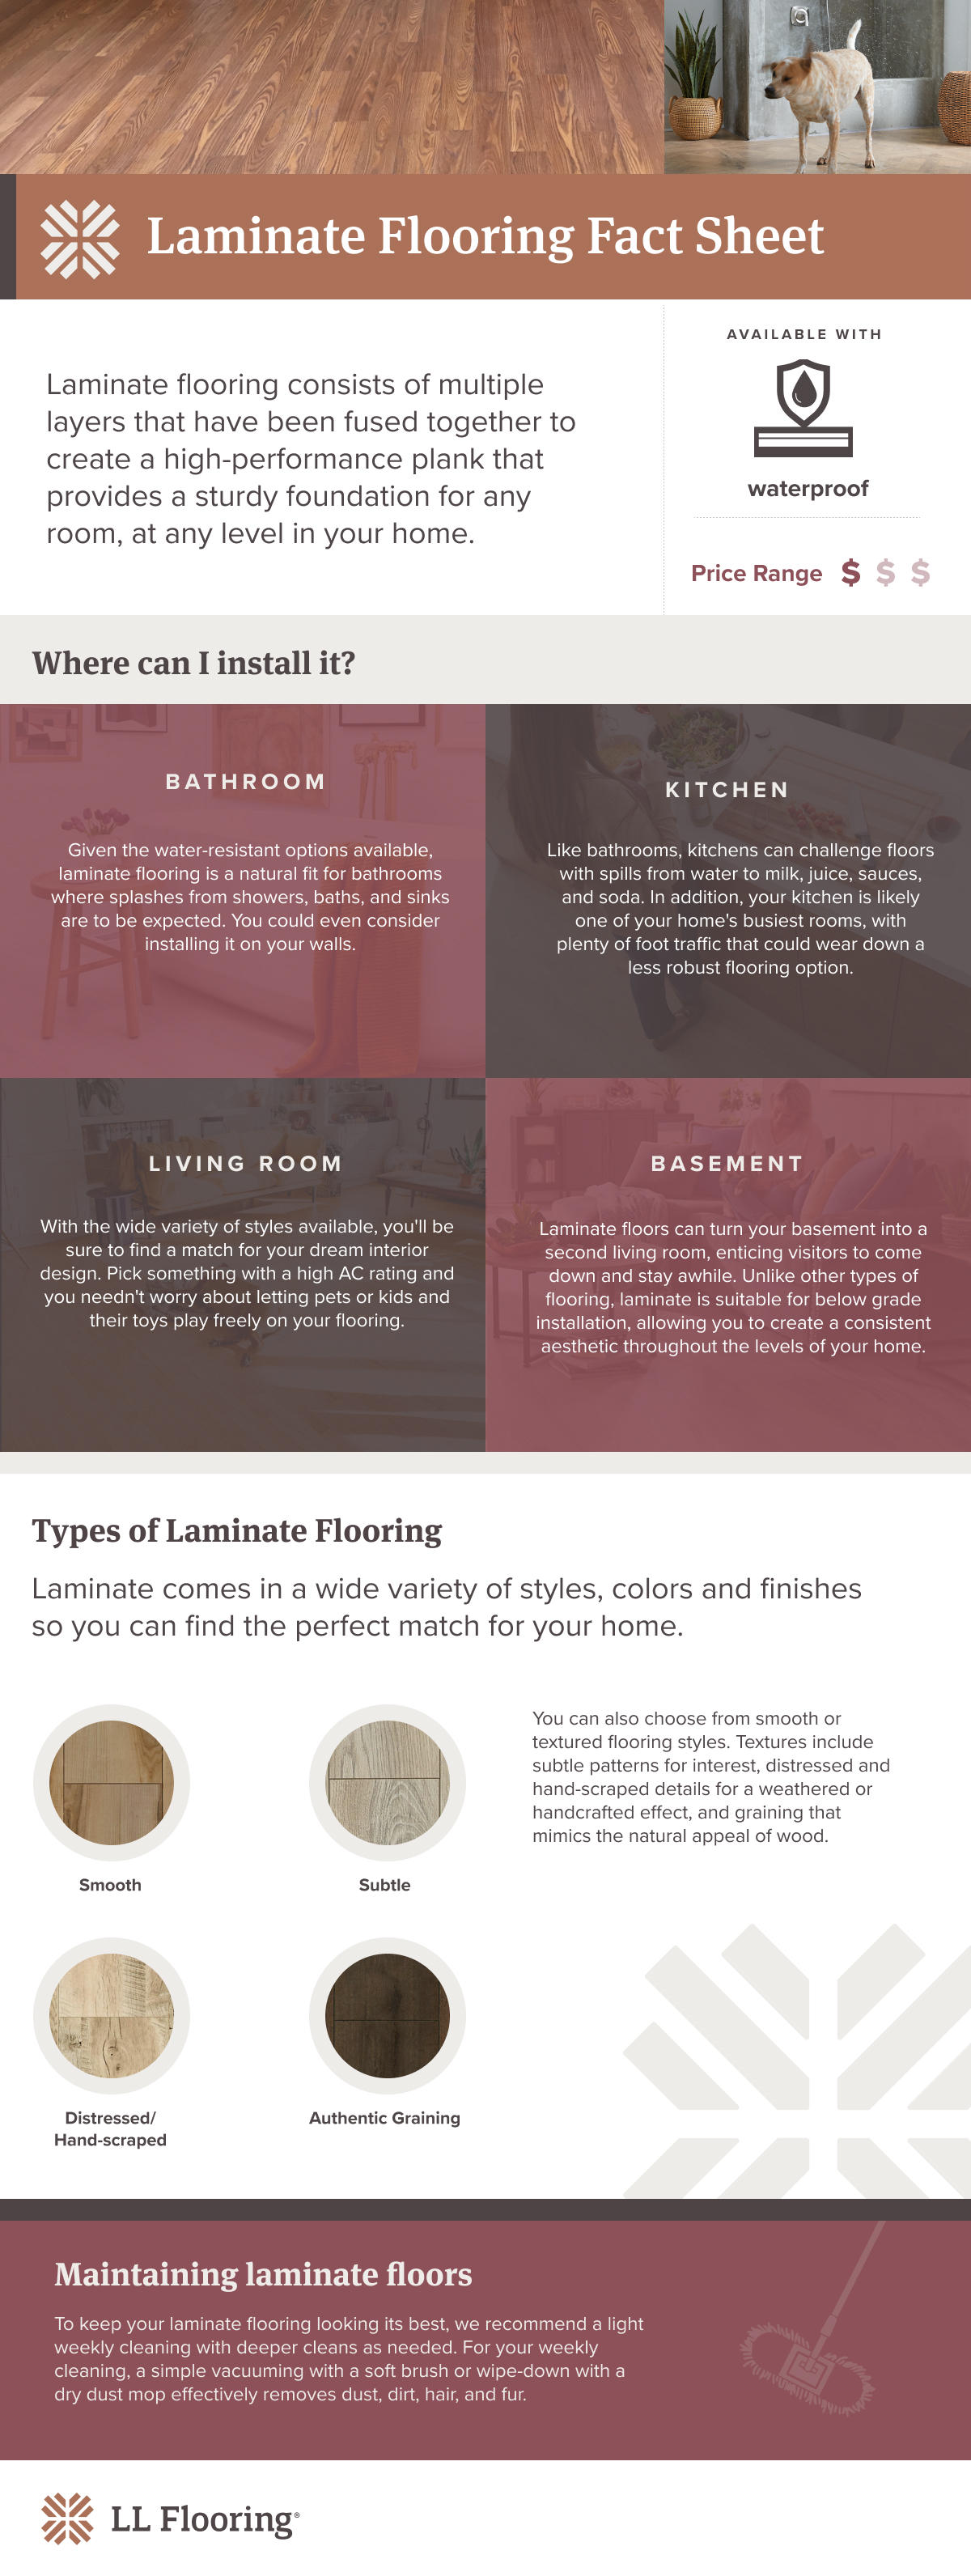 faq fact sheet brochure for laminate flooring